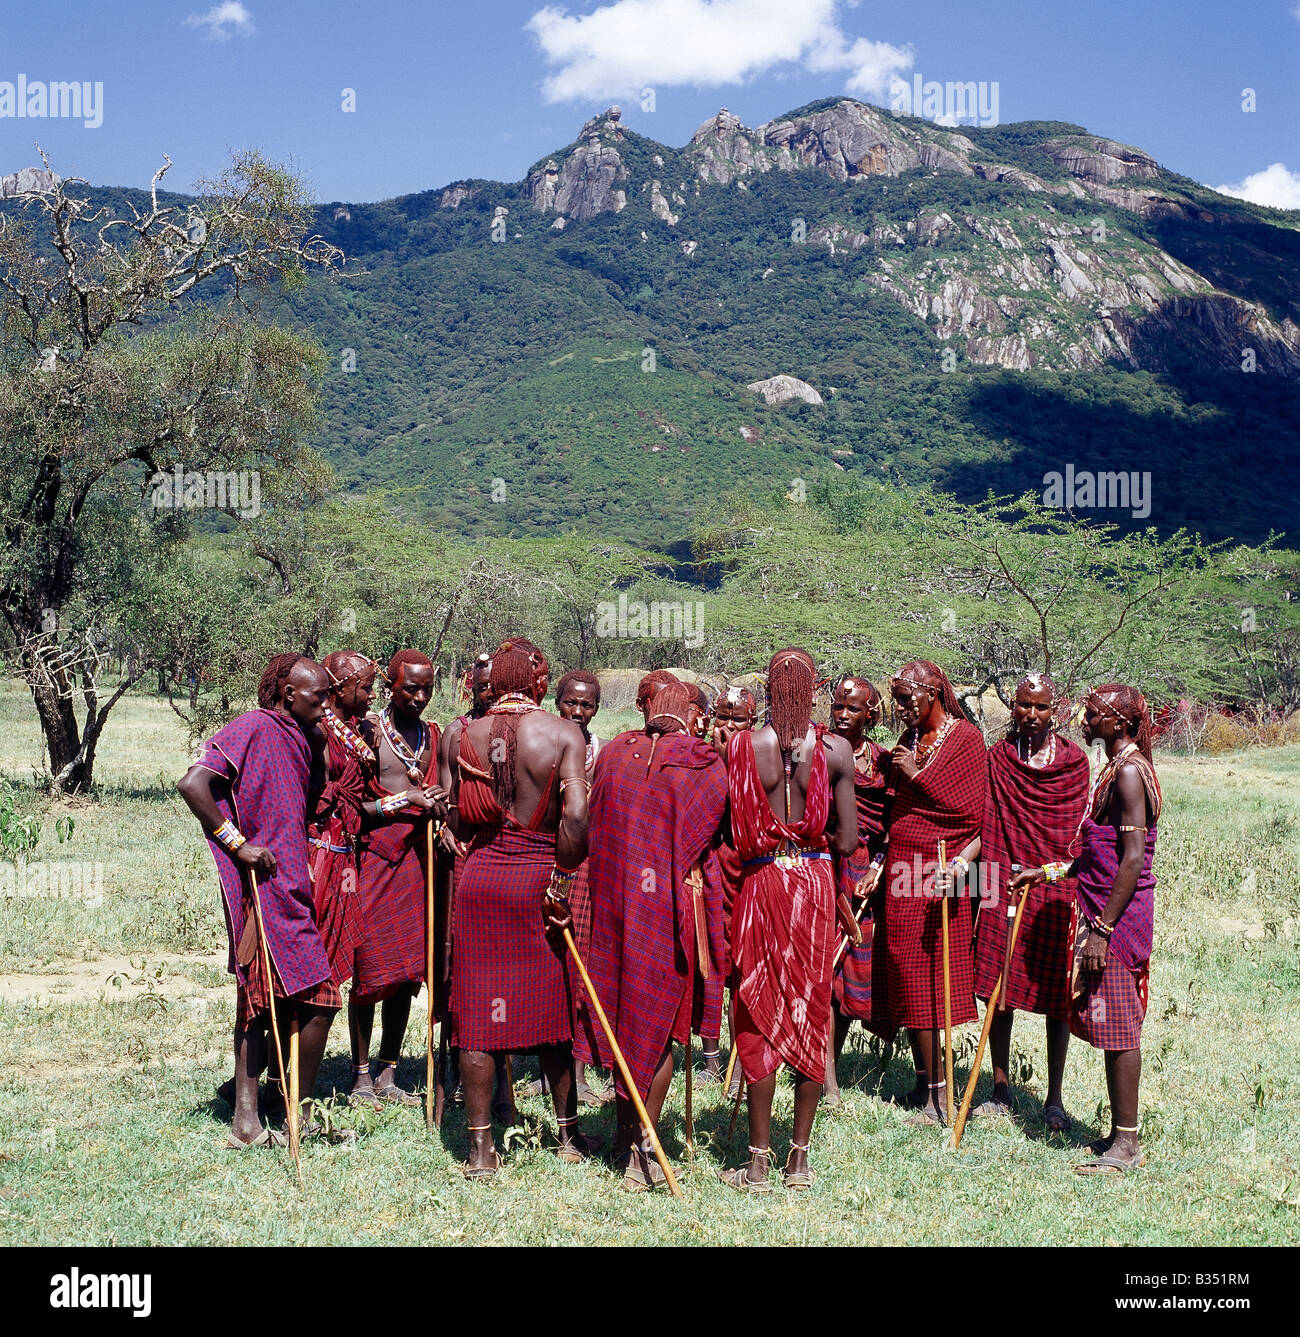 Kenya, Kajiado, Ol doinyo Orok. A group of Maasai warriors, resplendent with long Ochred braids, chat beneath Ol doinyo Orok, the black mountain. Stock Photo